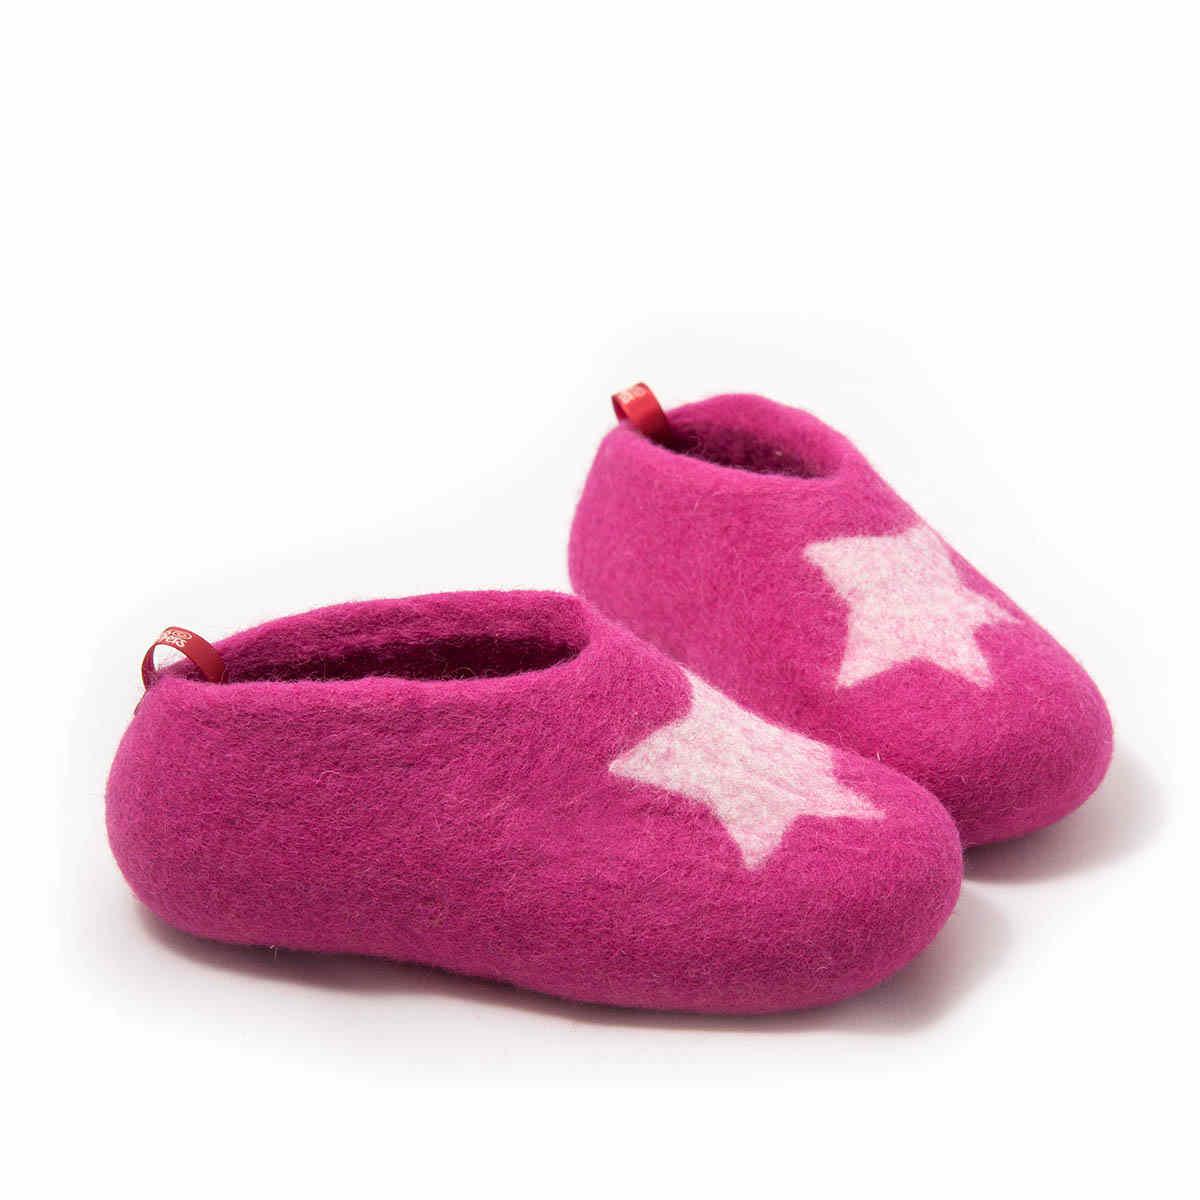 Girls felt slippers fuchsia pink - STAR 